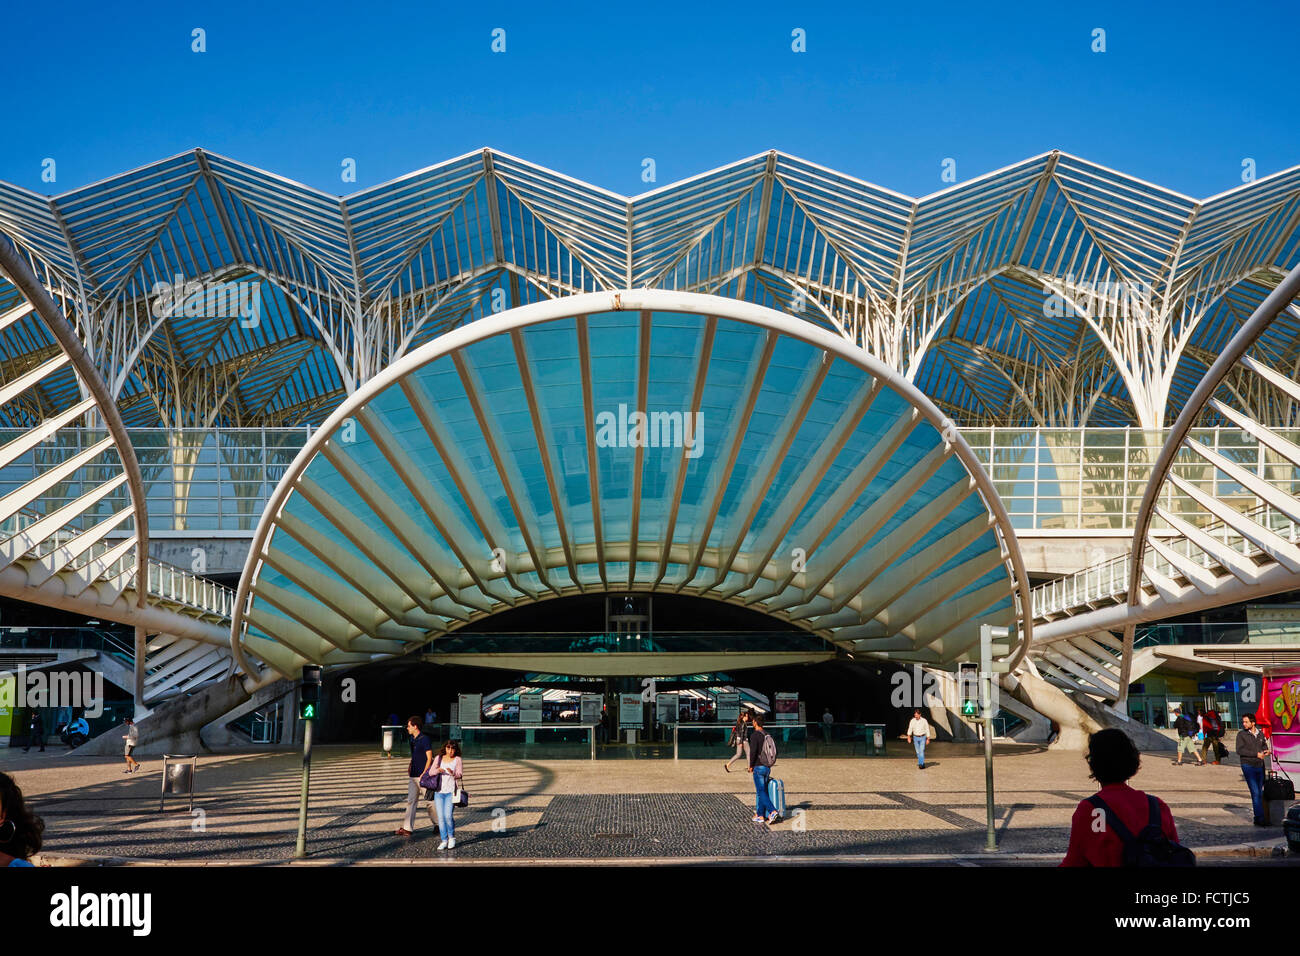 Portugal, Lisbon, Parque das Nações, Park of Nations, Gare do Oriente or Oriente railway station, designed by par Santiago Calat Stock Photo